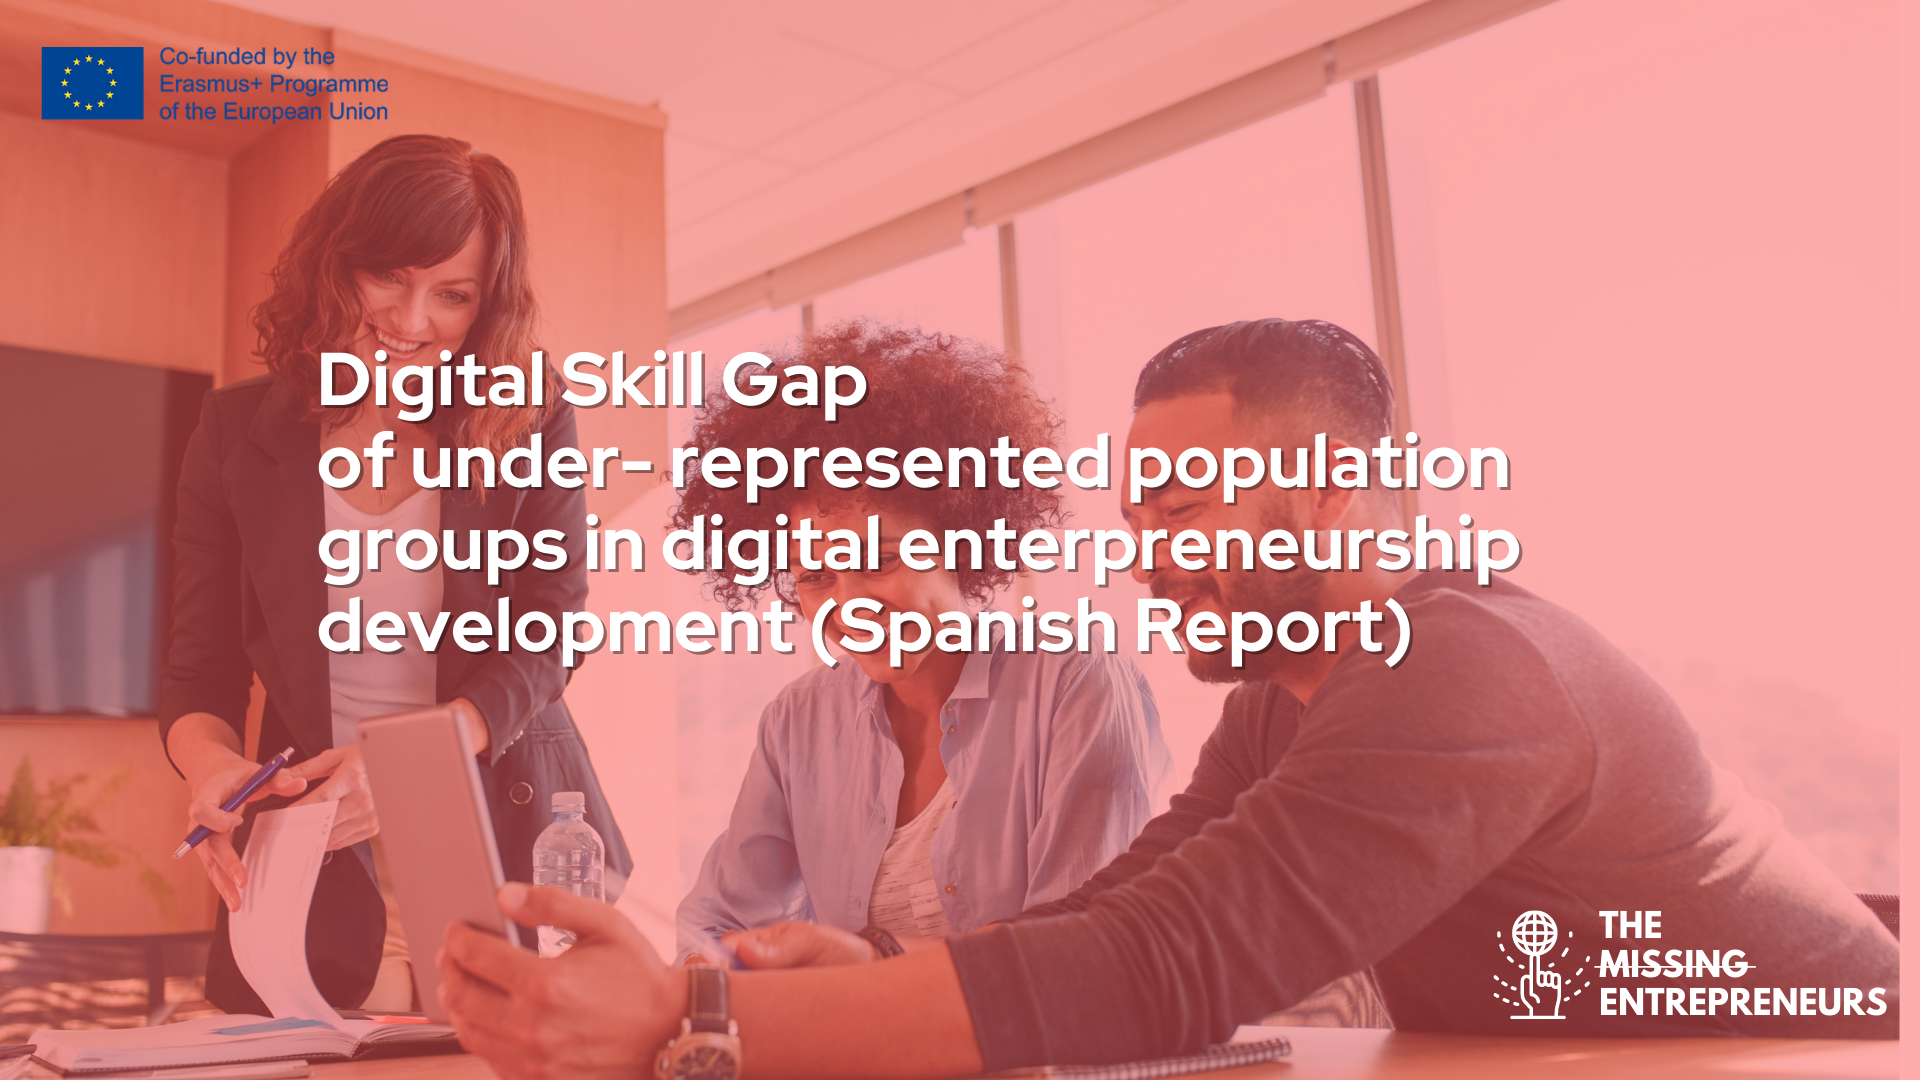 Comprehensive framework of skills digital gaps of under-represented population groups in Spain